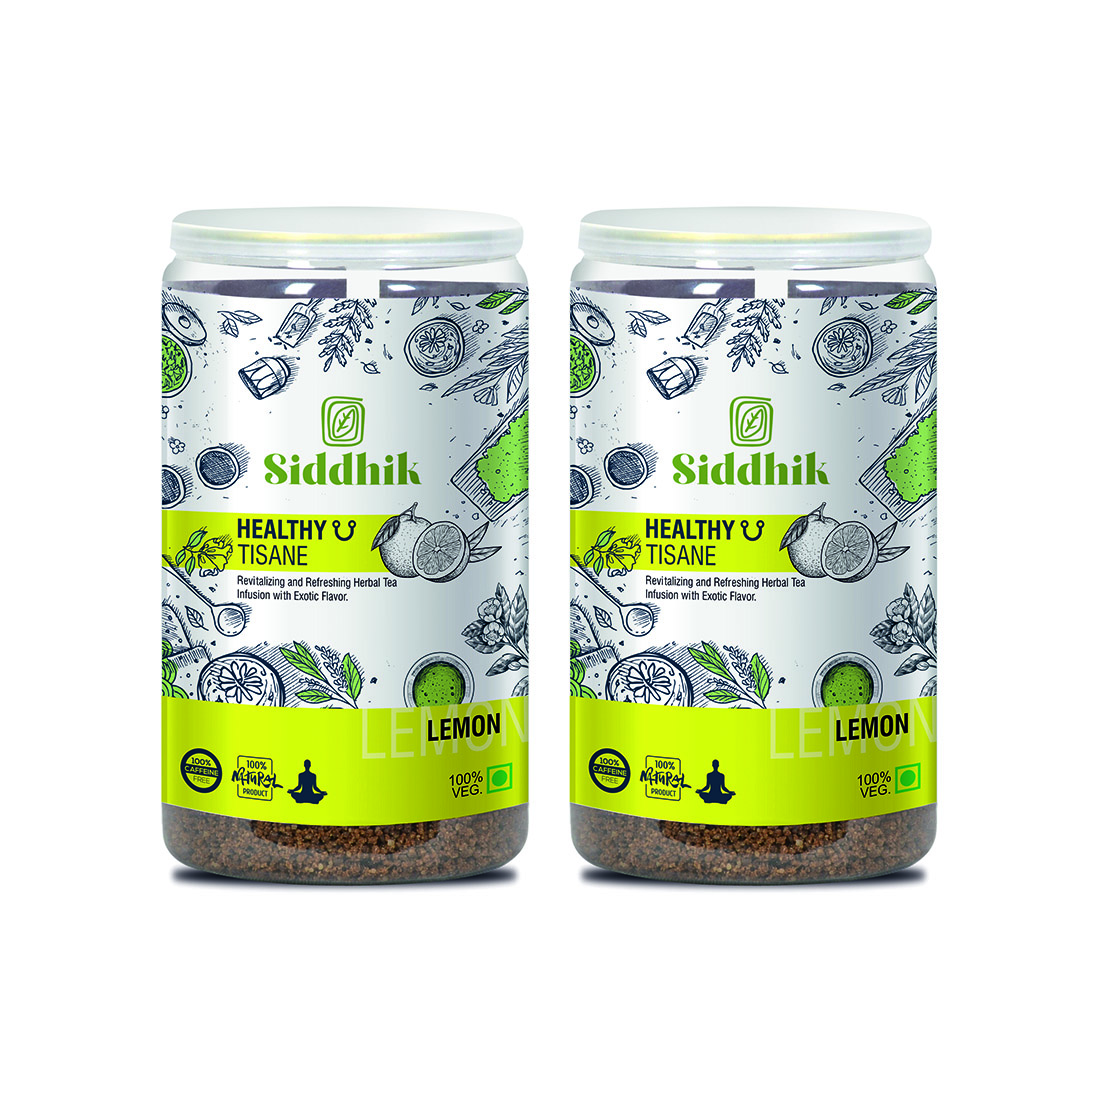 Siddhik Healthy U Tisane Lemon Tea Revitallizing and Refreshing Herbal Tea Infusion with Exotic flavor 250 grams Pack of 2